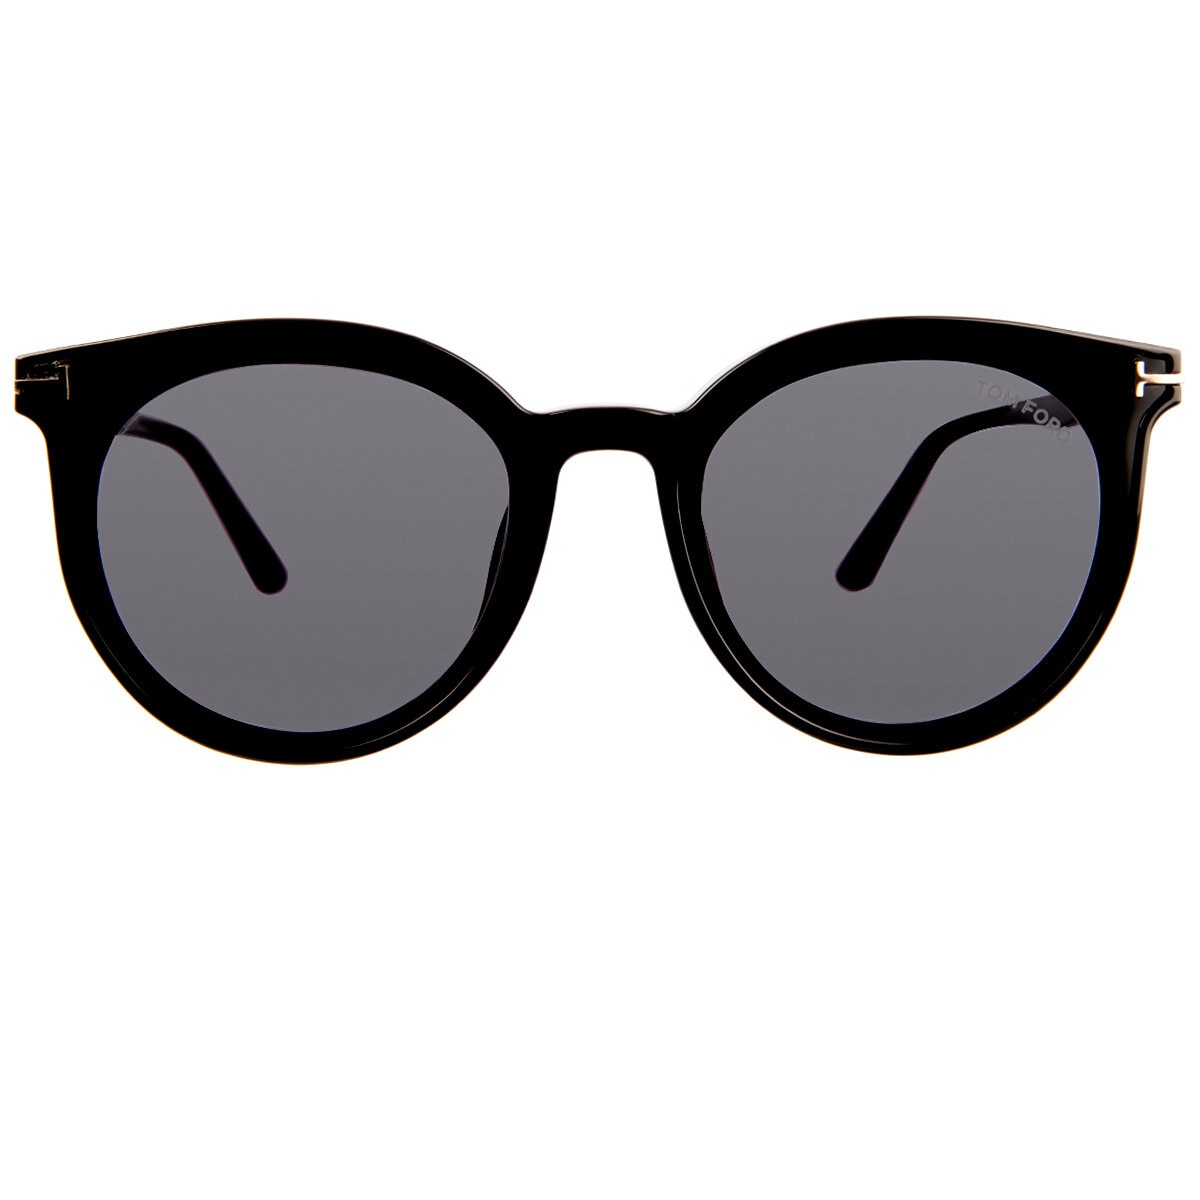 Top 75+ imagen tom ford eyeglasses costco